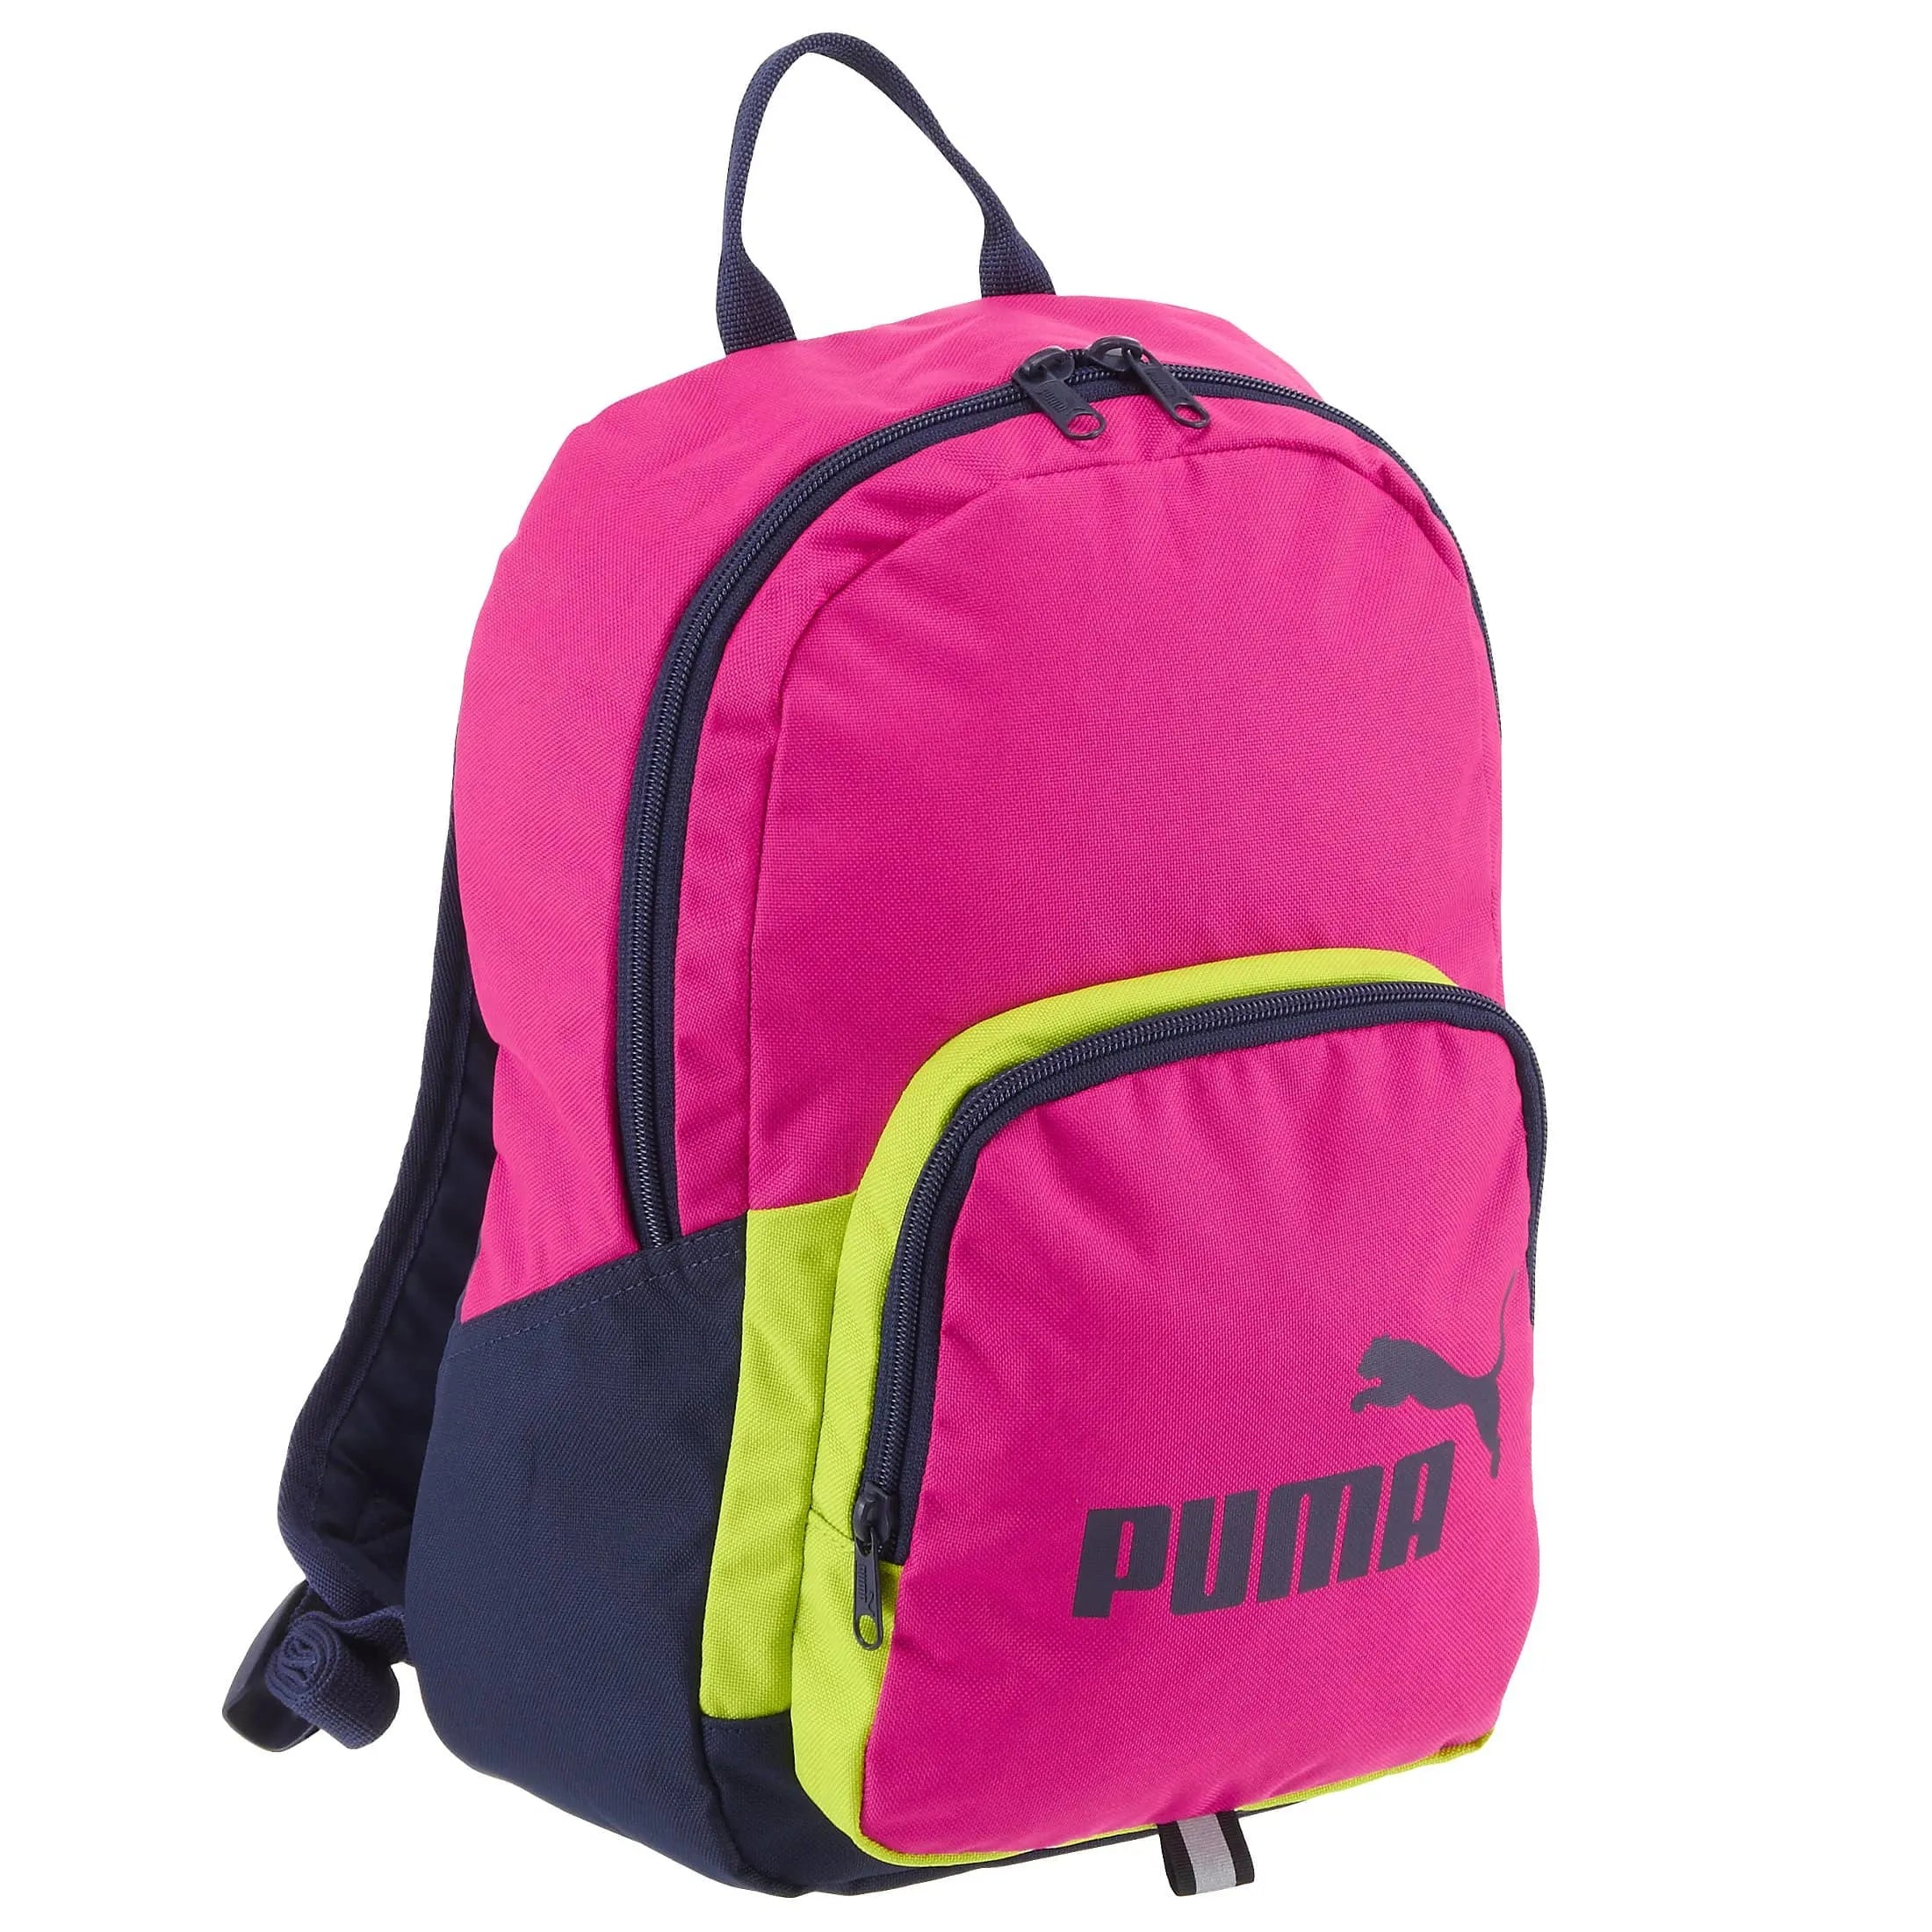 Puma Sports Phase Kinderrucksack 35 cm - lapis blue-toreador